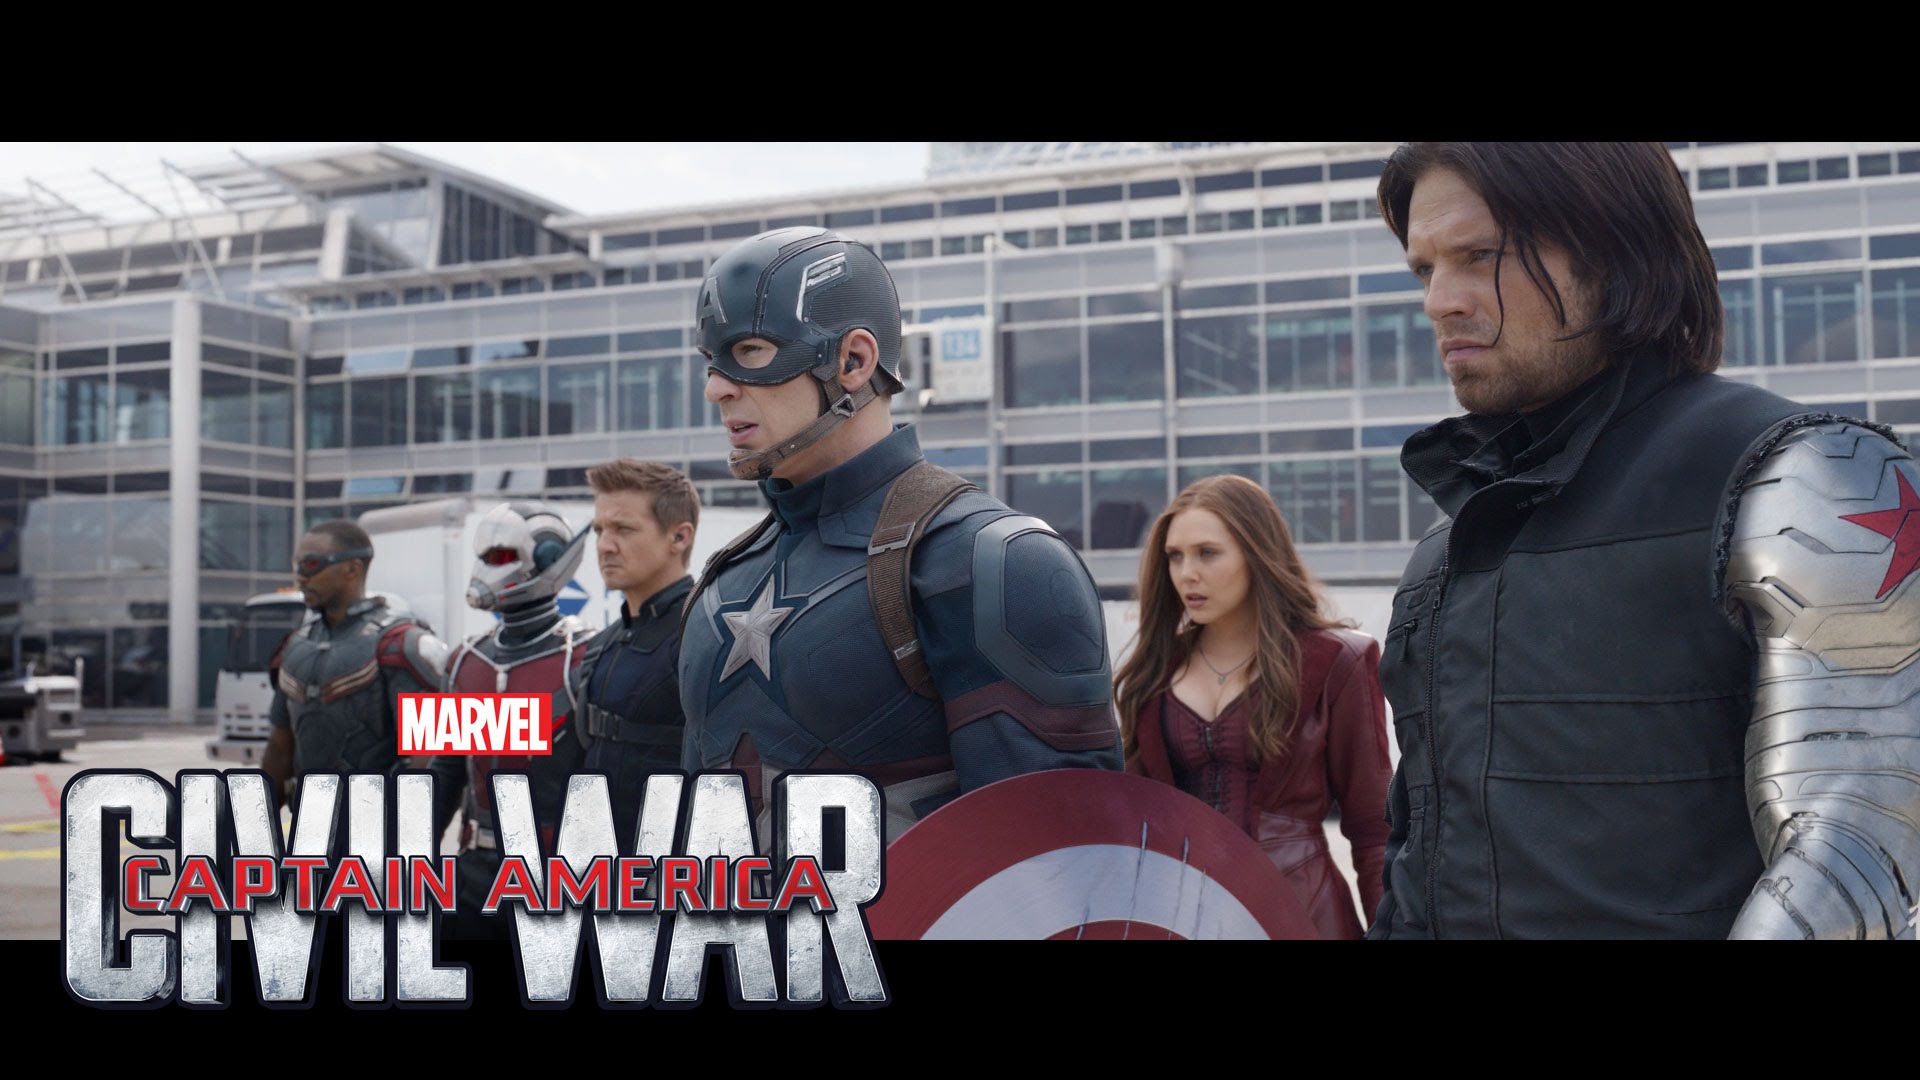 The Safest Hands - Marvel's Captain America: Civil War